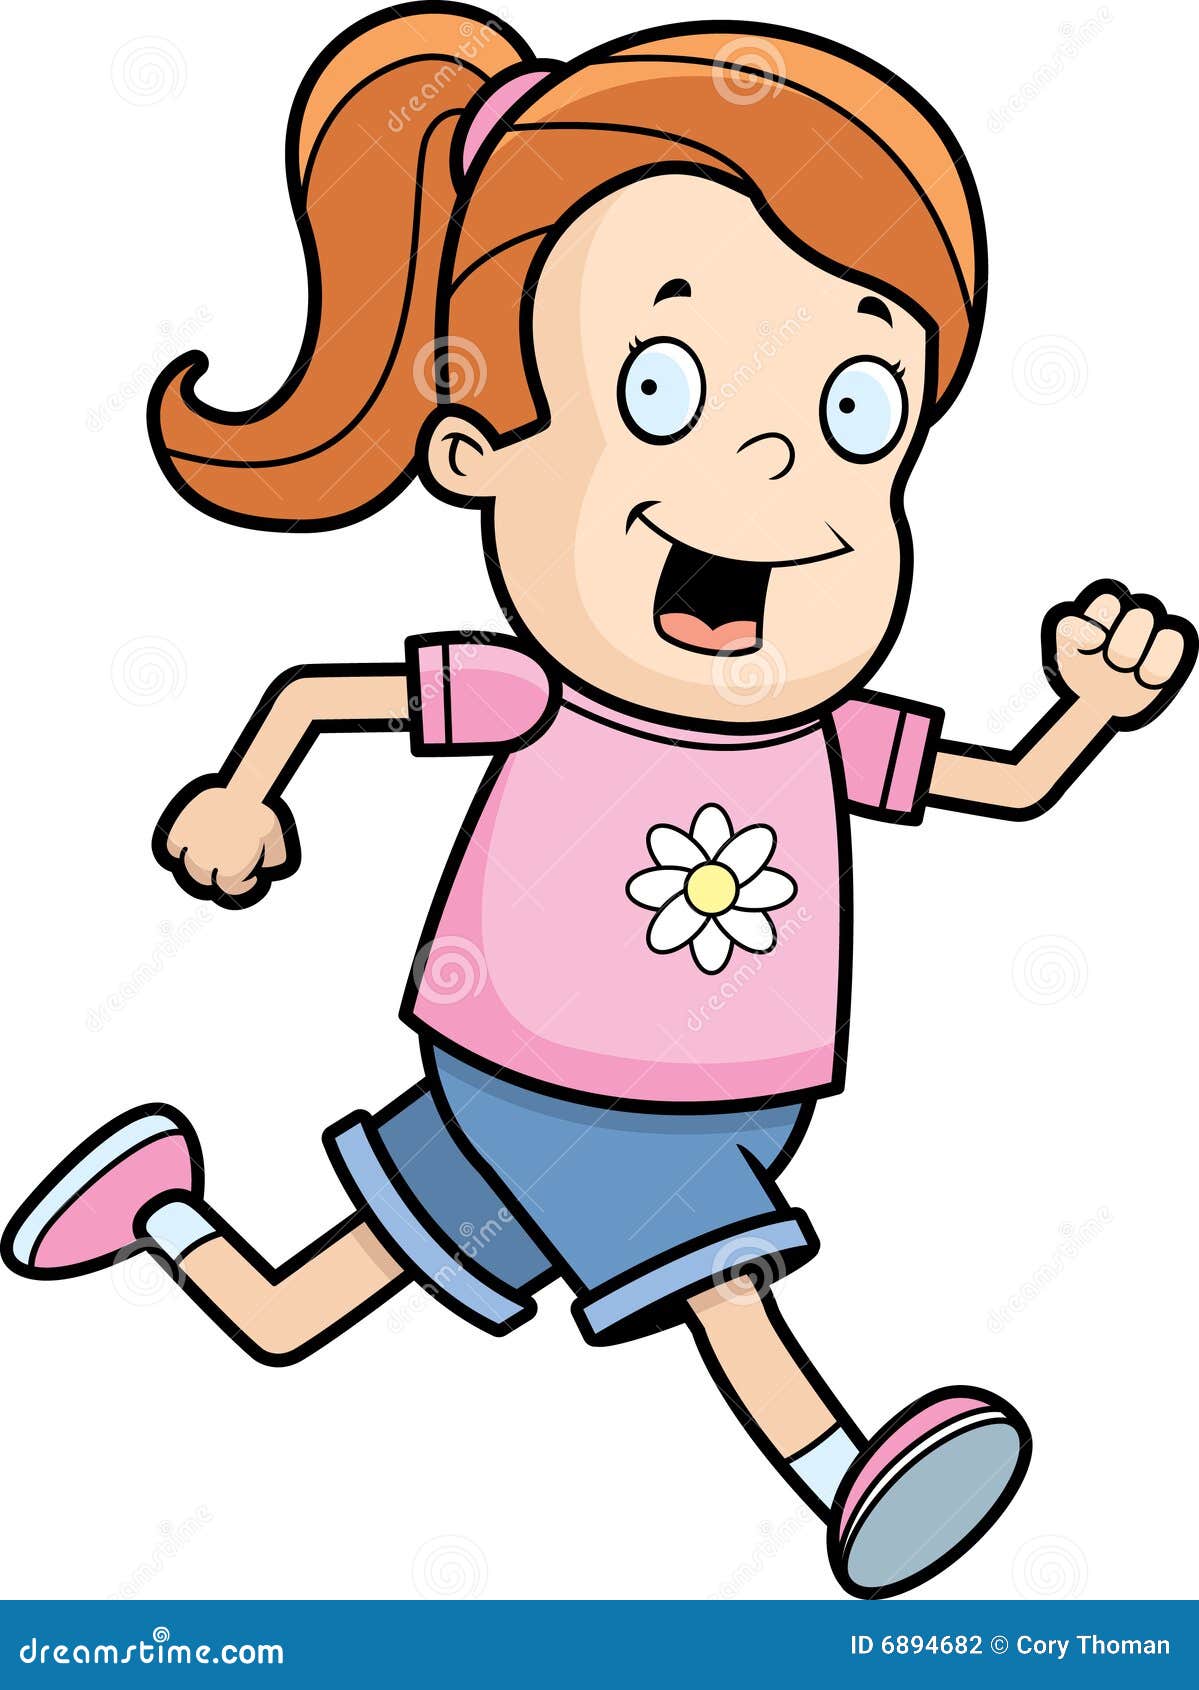 clipart girl jogging - photo #44